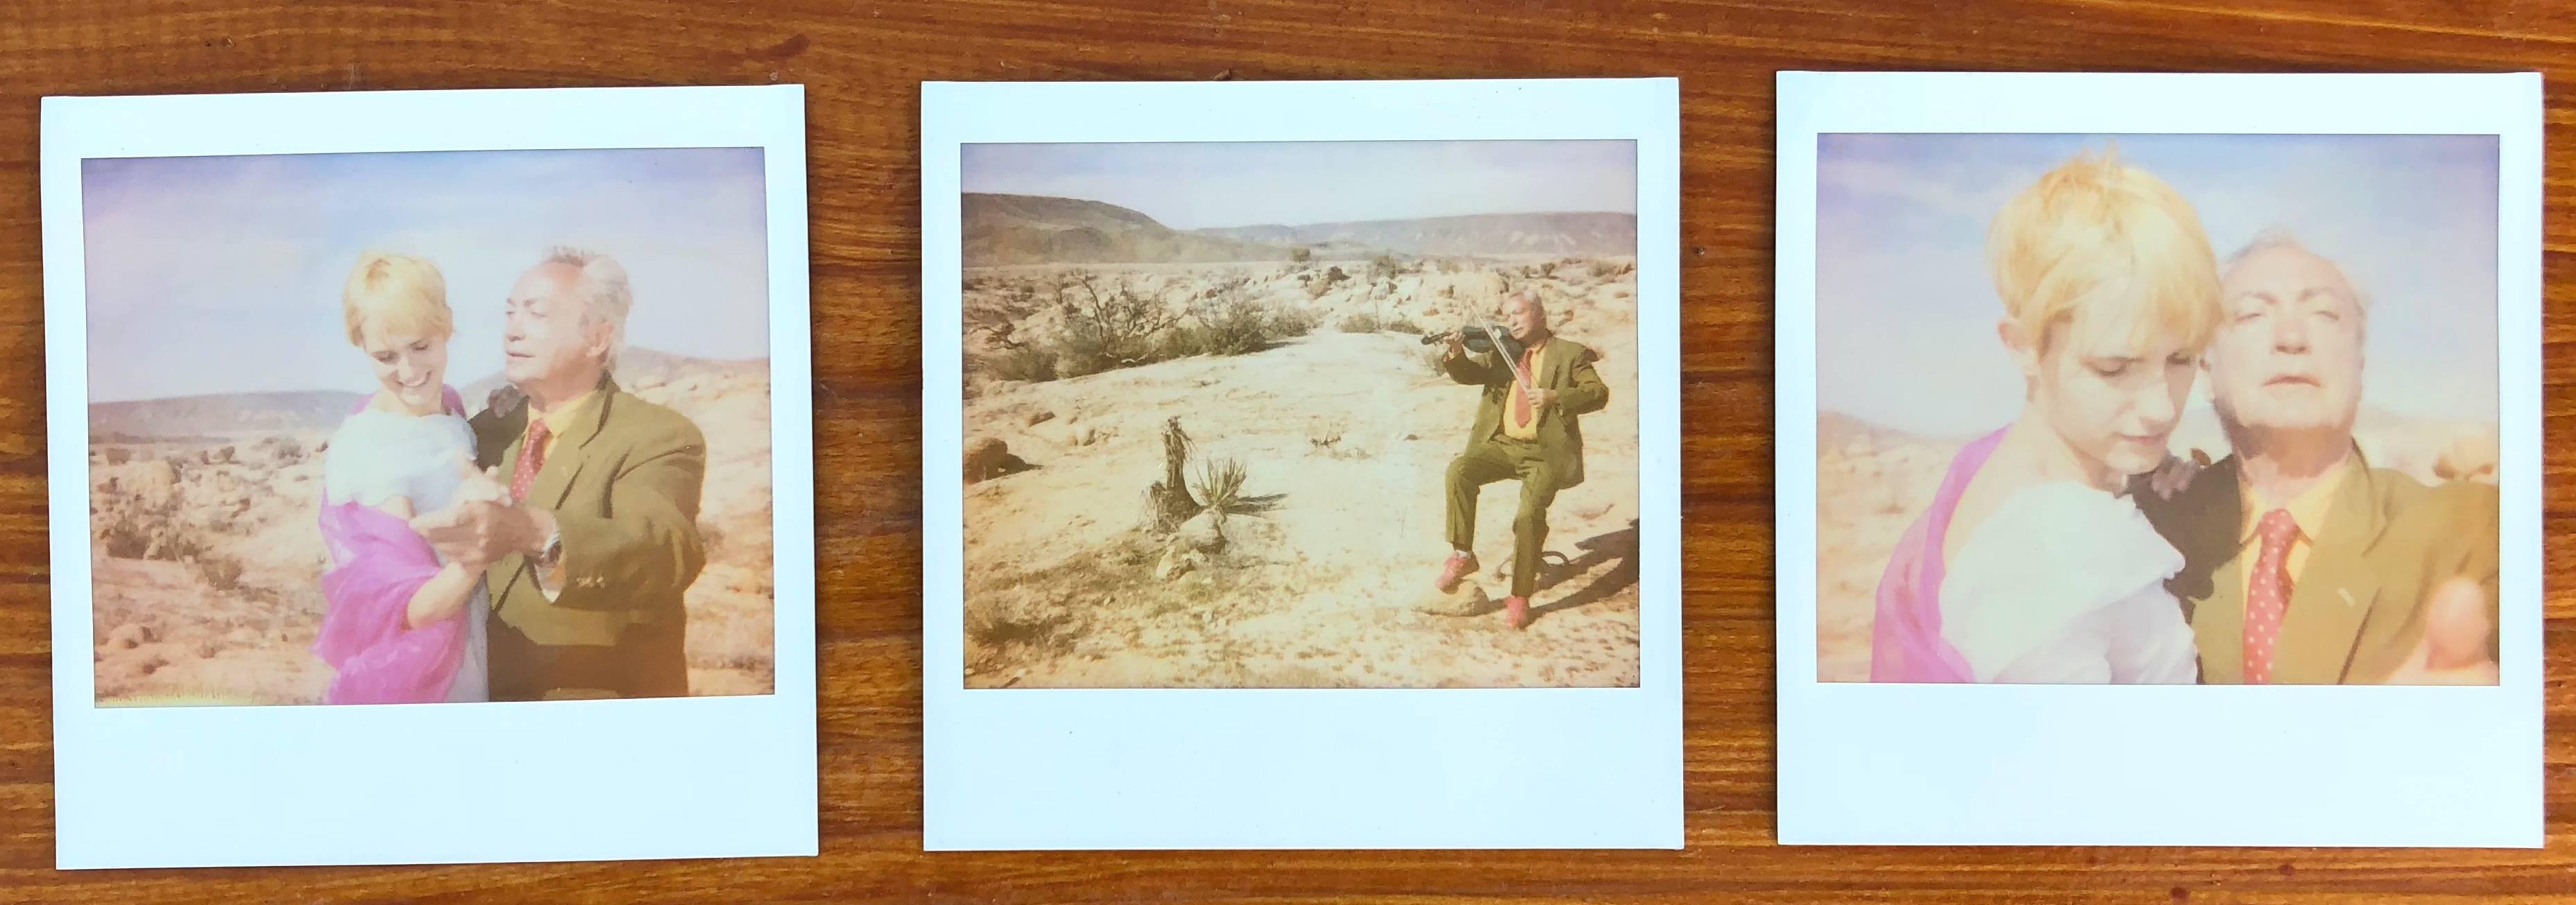 Stefanie Schneider Landscape Photograph - The Dancer - Original Polaroid Unique Piece, triptych, featuring Udo Kier